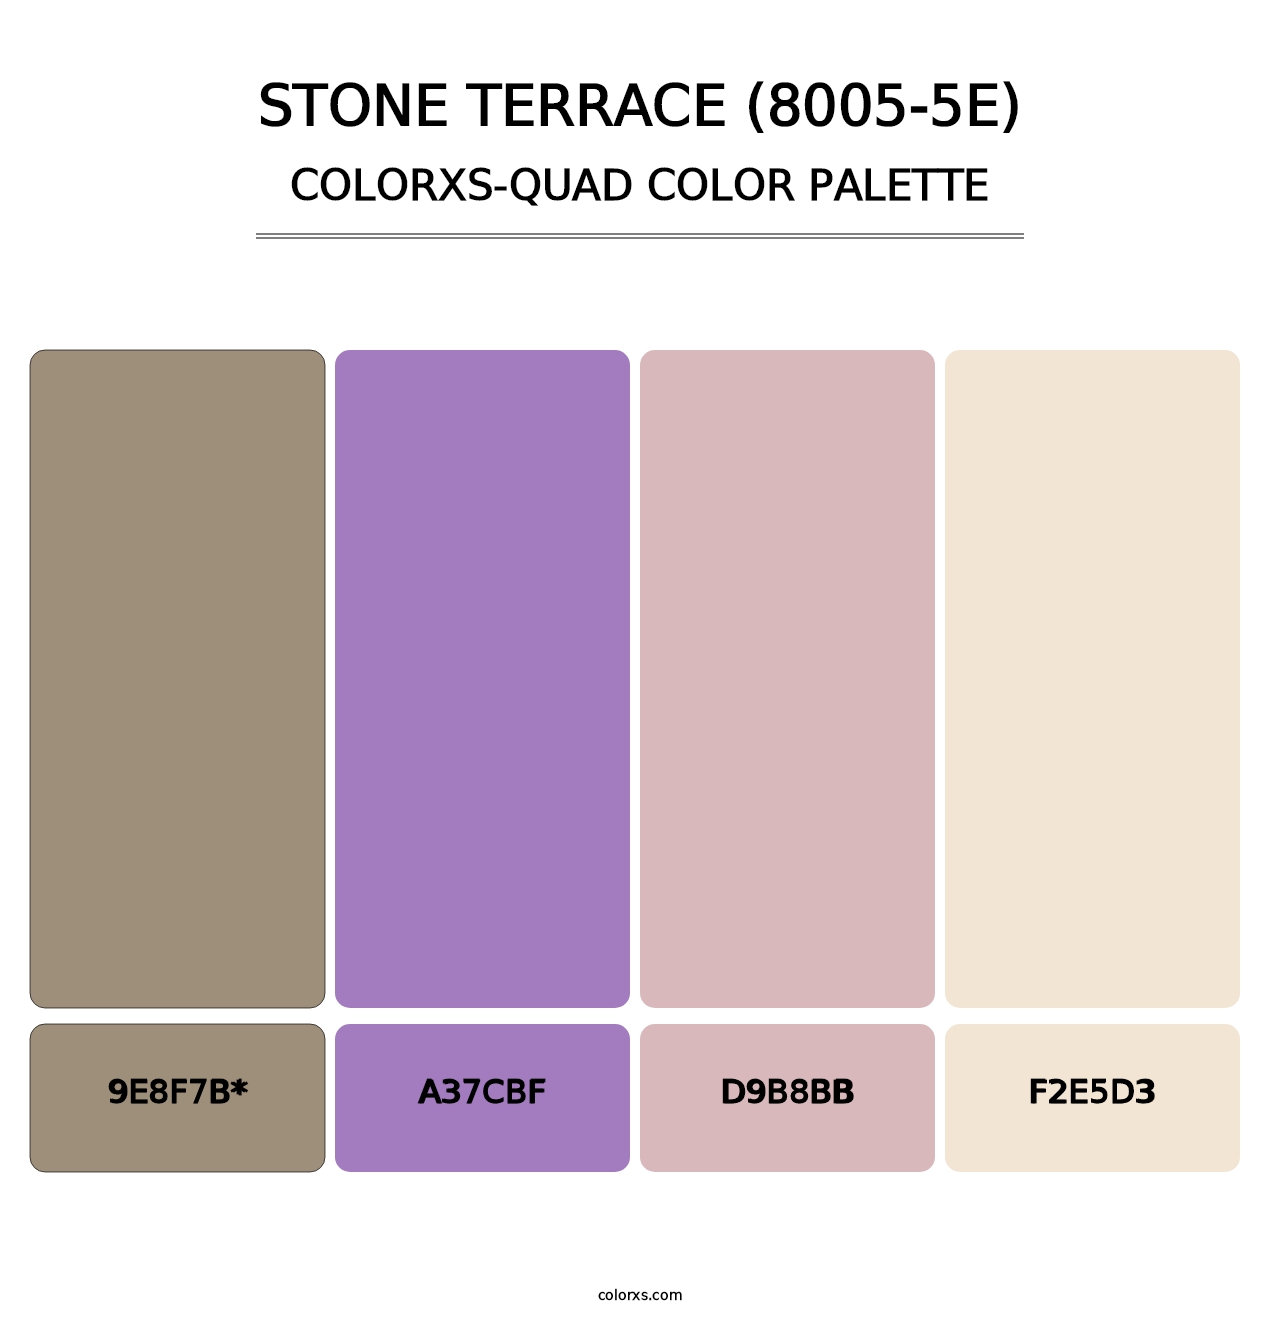 Stone Terrace (8005-5E) - Colorxs Quad Palette